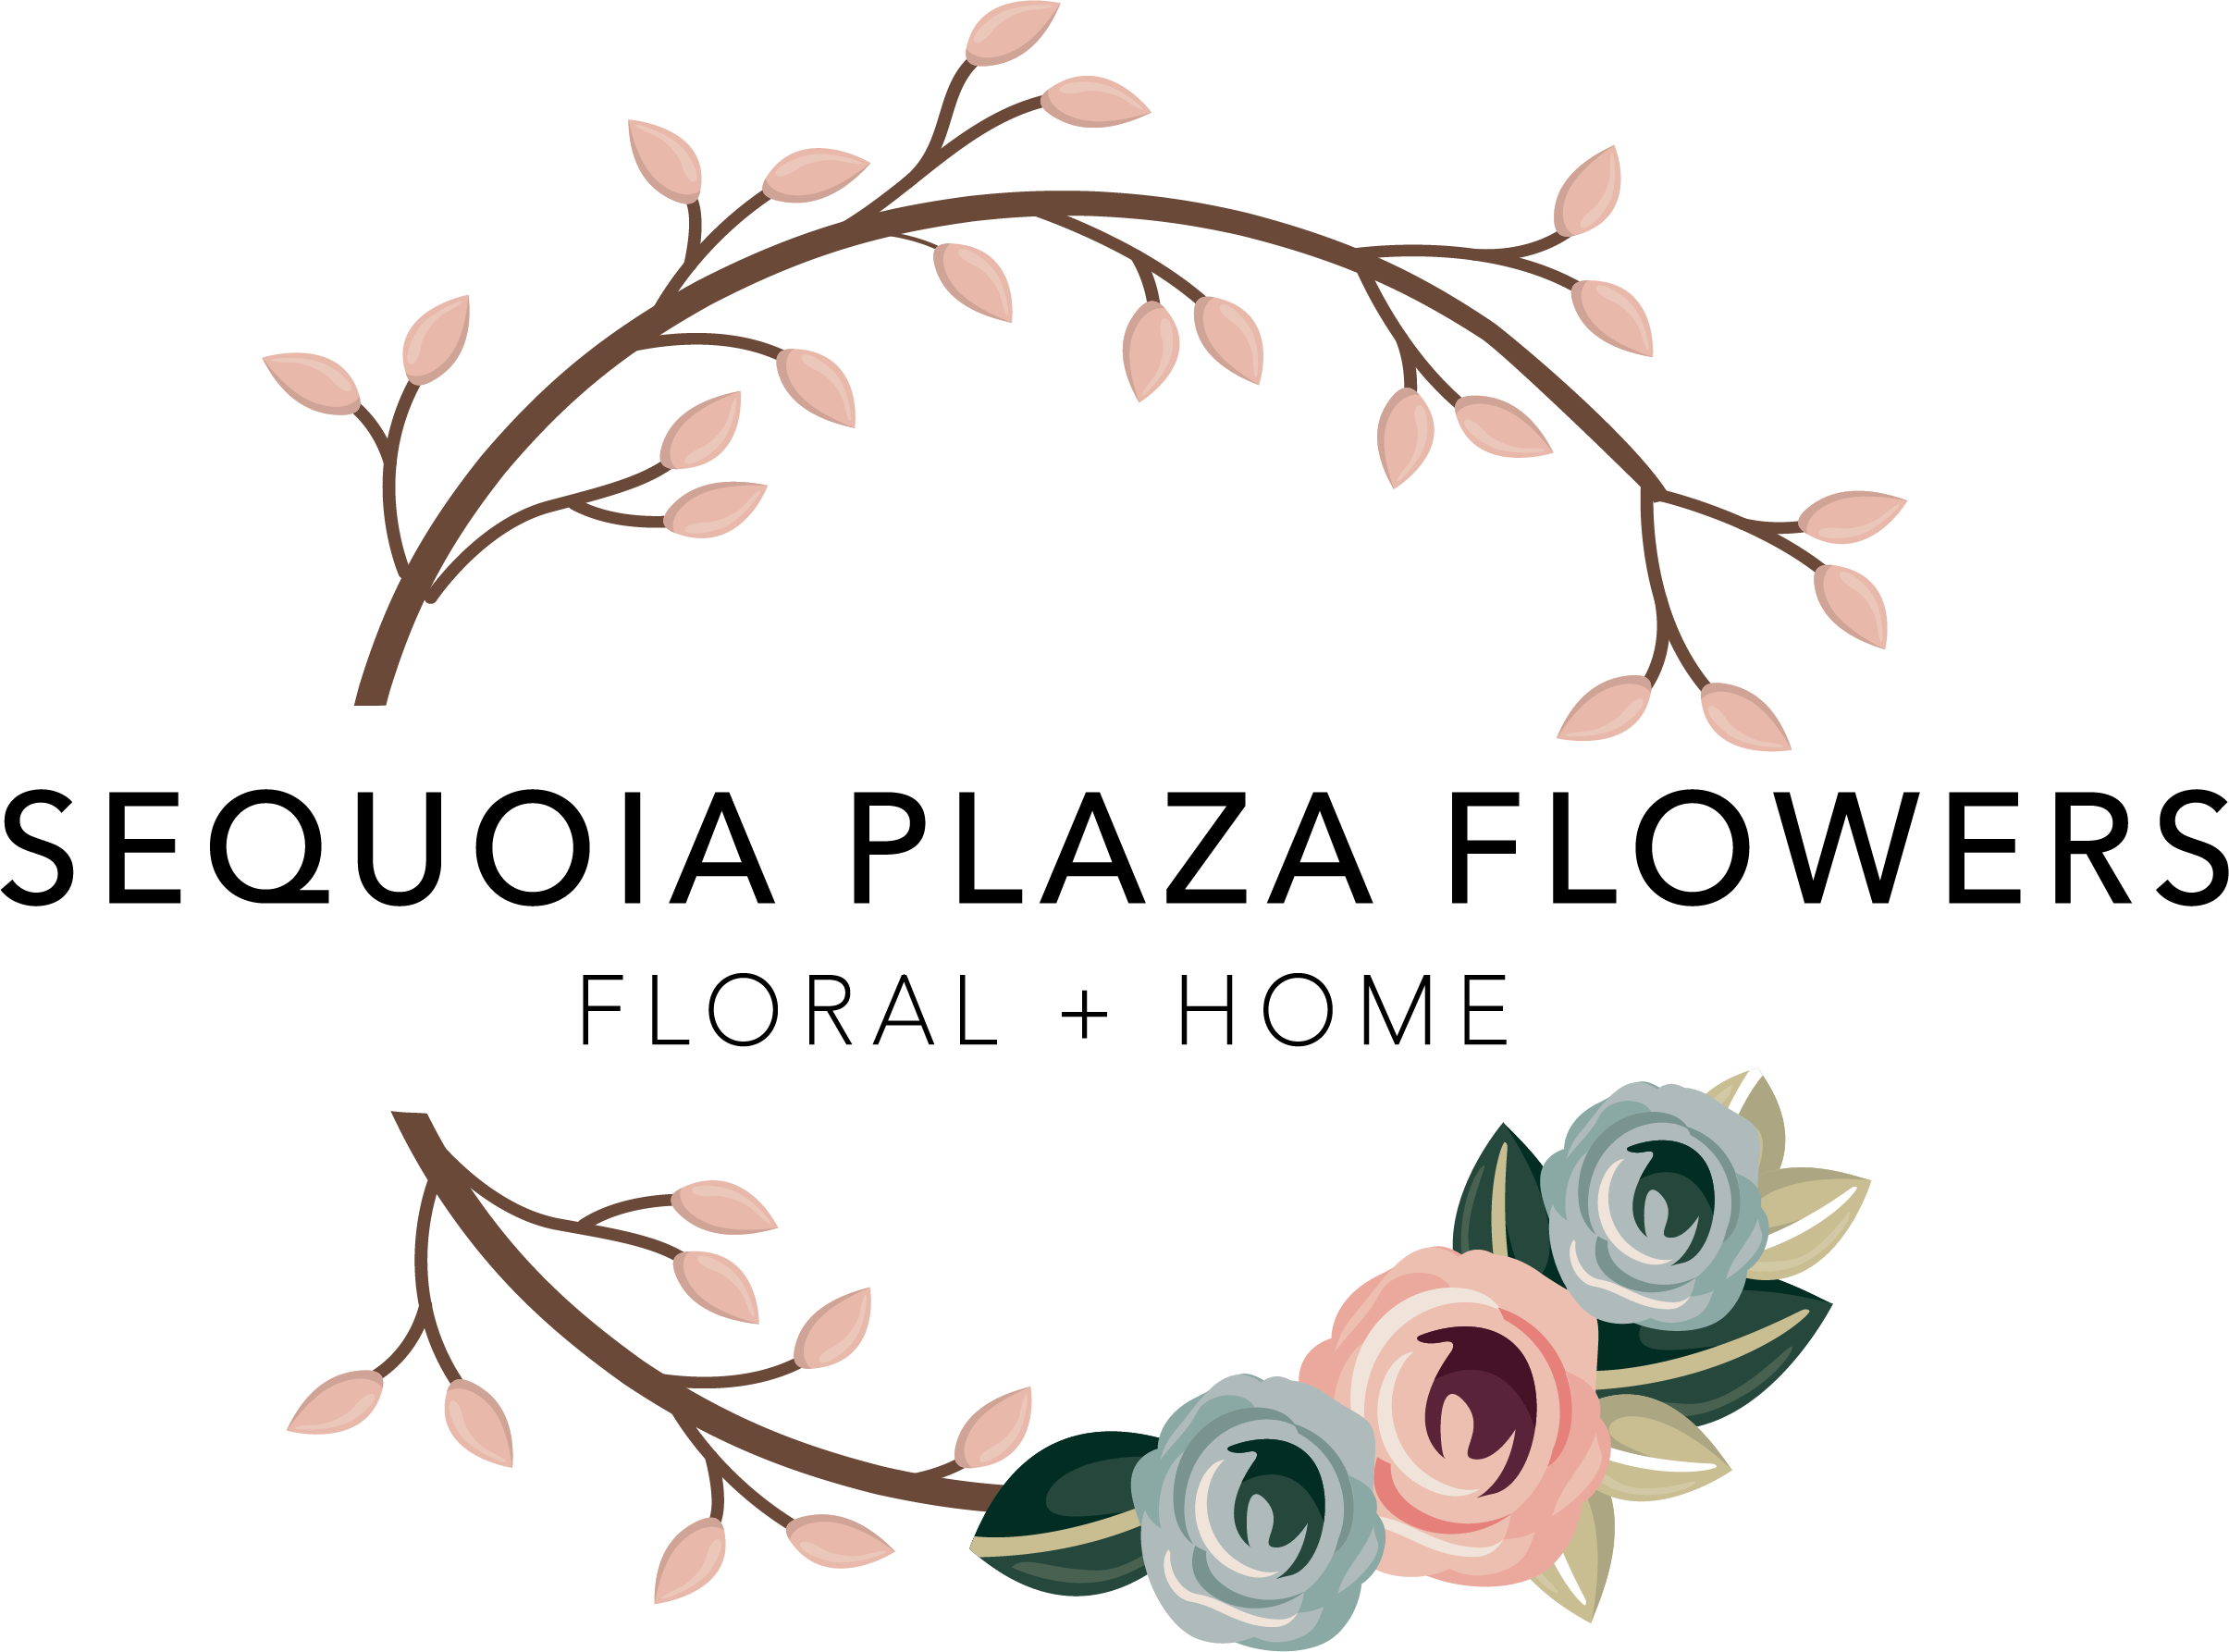 Fresh Flower Logo - Sequoia Plaza Flowers, Visalia CA. Local Flower Shop 93291